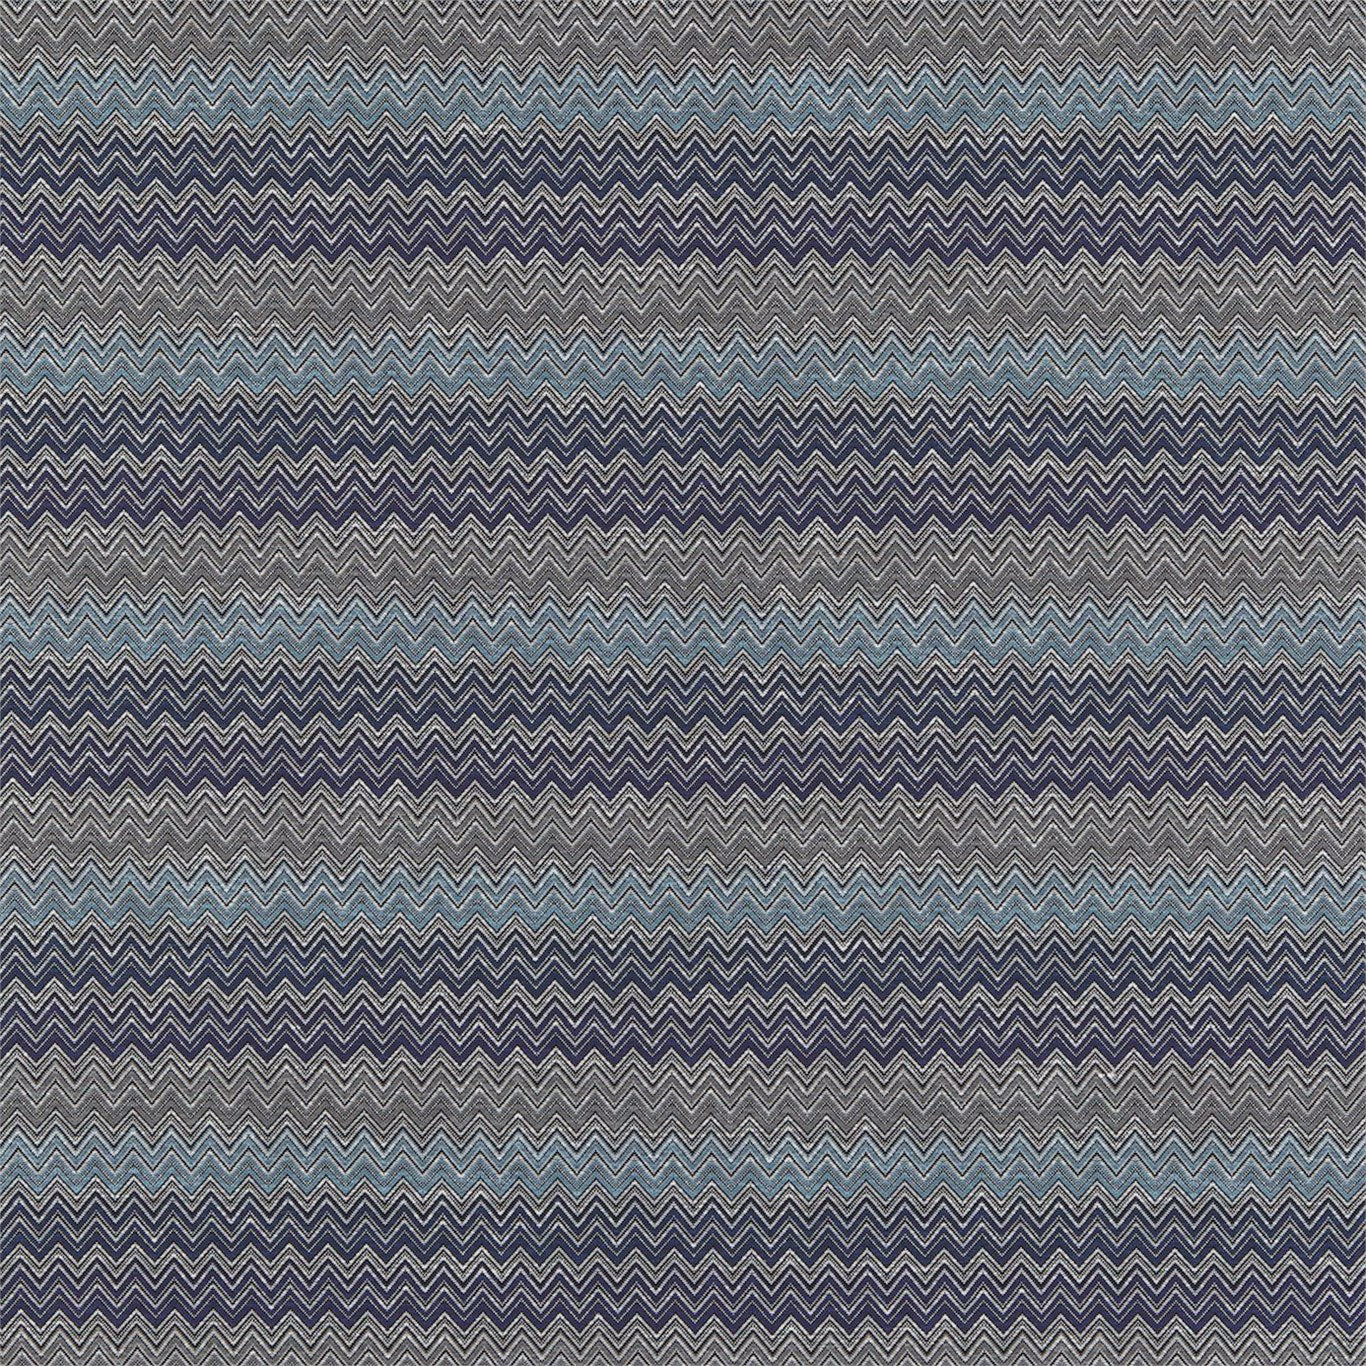 Chevron Fabric by Harlequin - HMOU130664 - Cobalt Denim Ice Steel